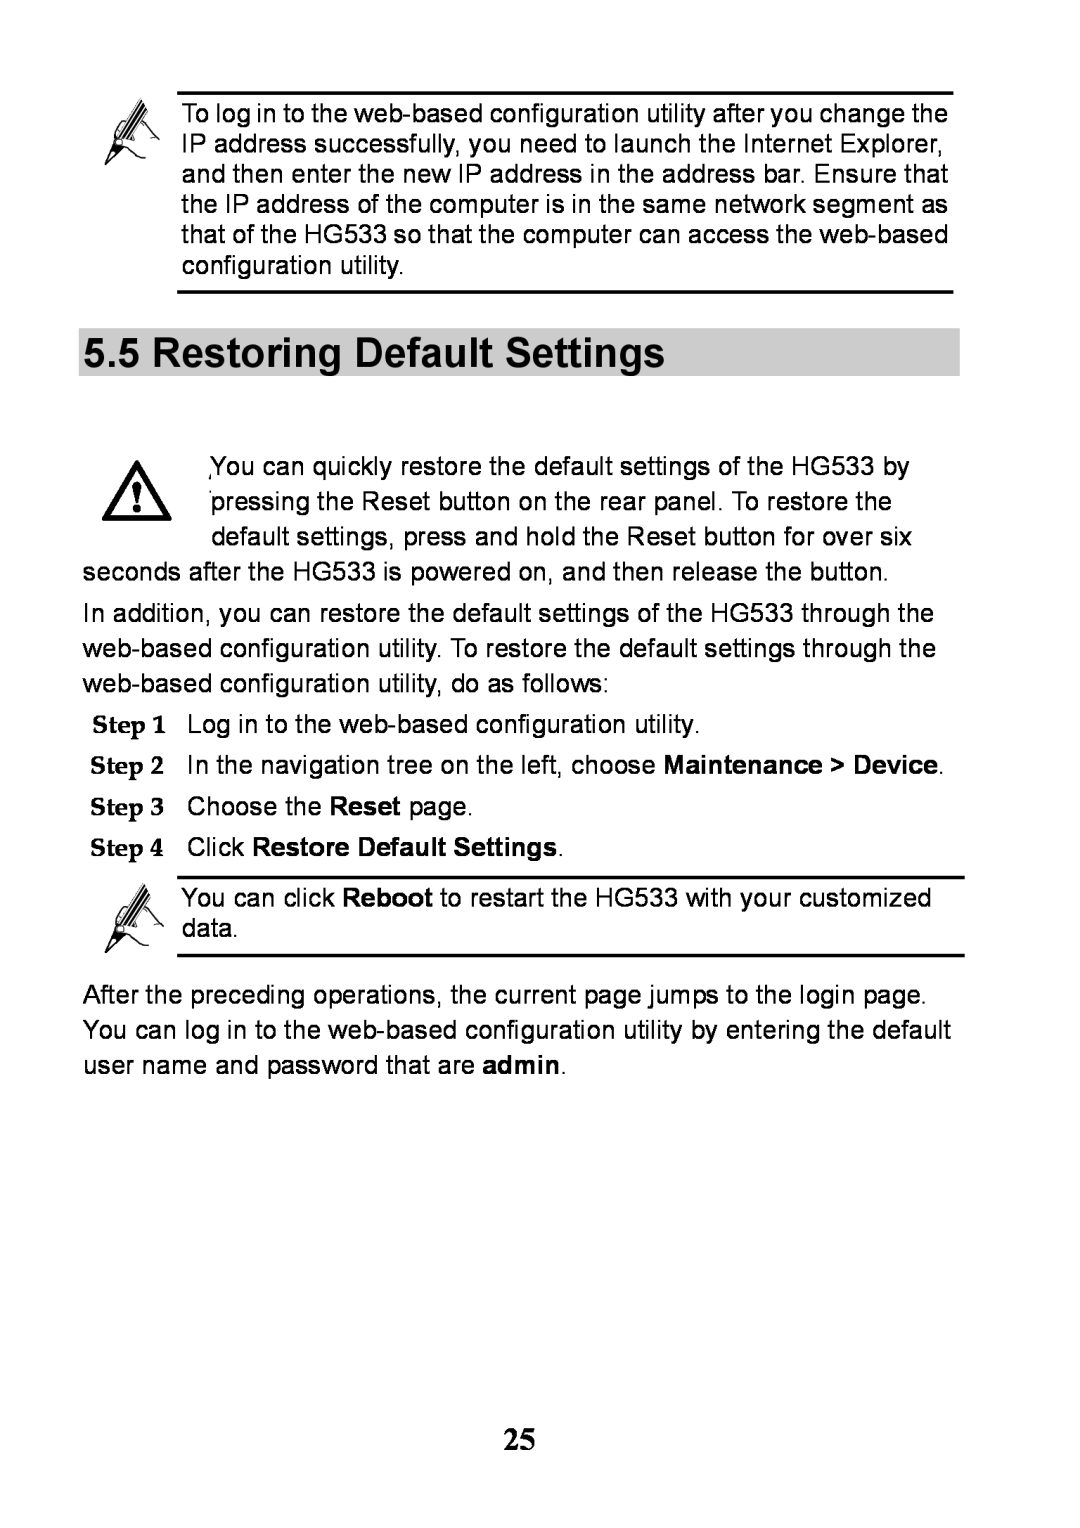 Huawei V100R001 manual Restoring Default Settings, Click Restore Default Settings 